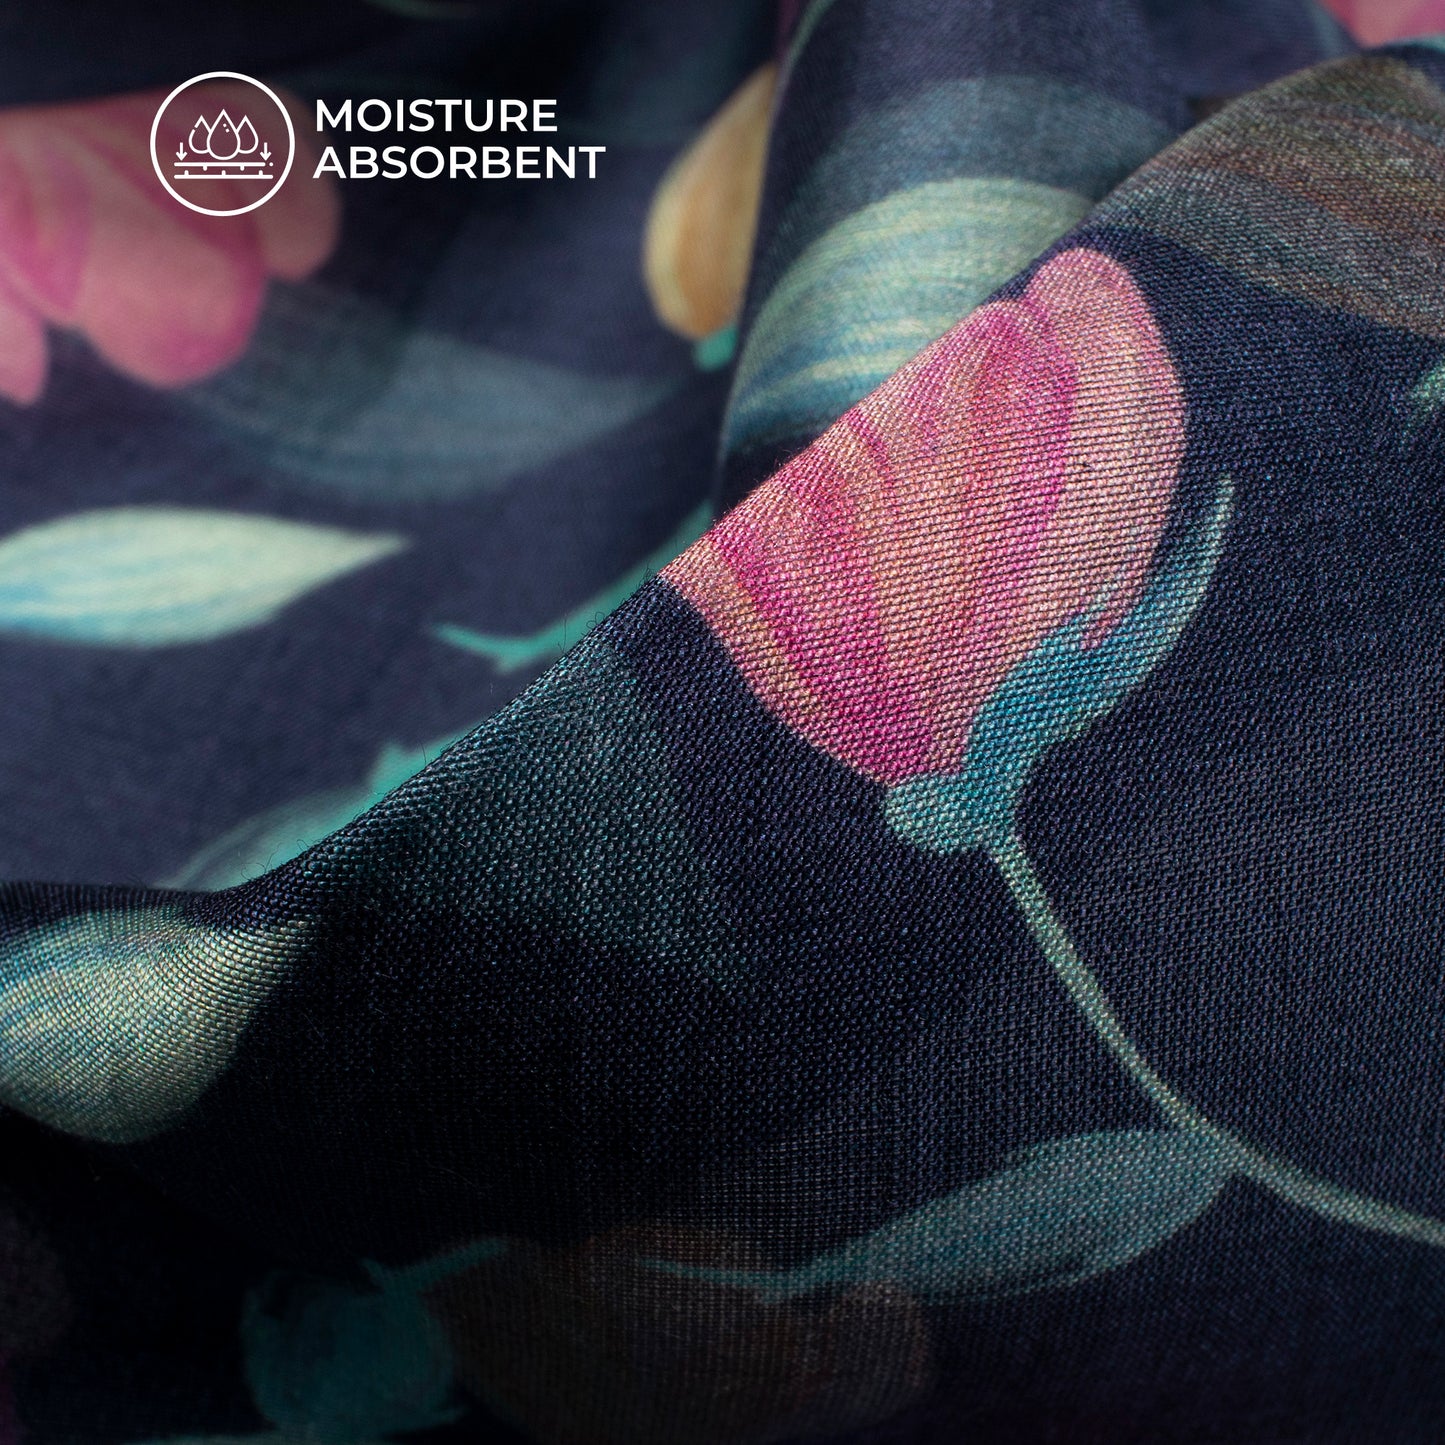 Trendy Floral Digital Print Viscose Muslin Fabric